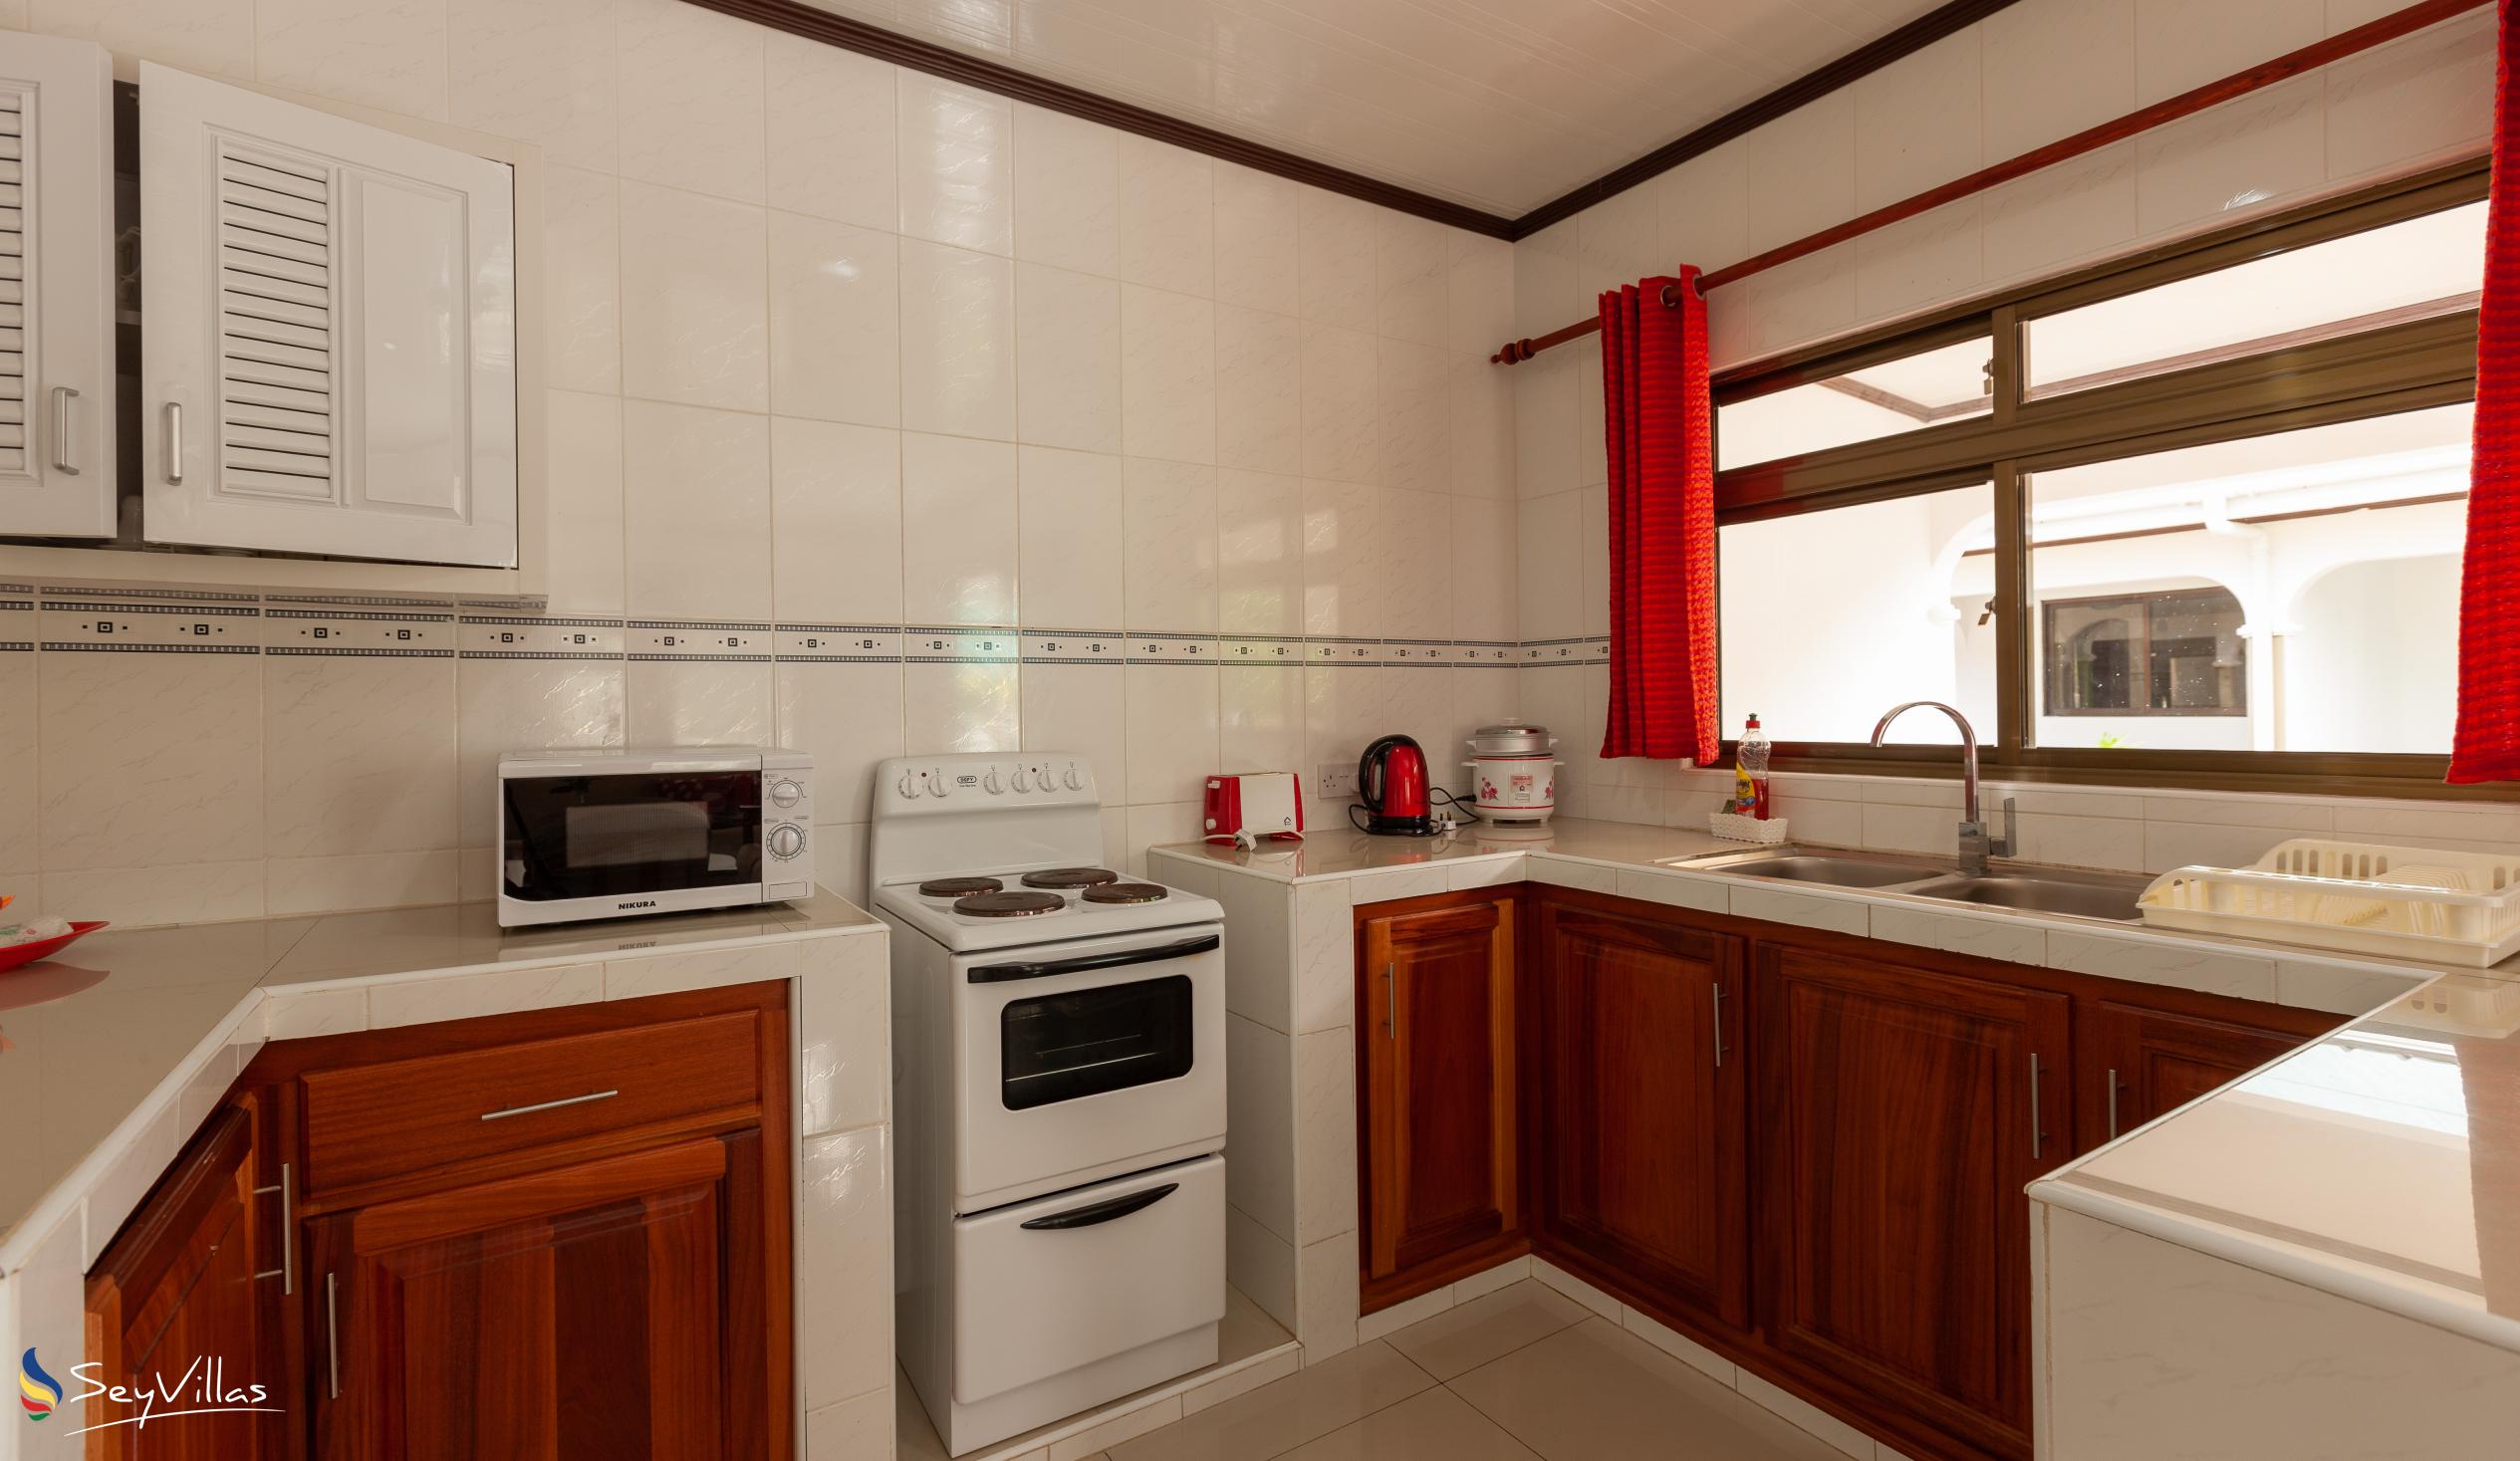 Photo 65: Belle Vacance Self Catering - 1-Bedroom Apartment - Praslin (Seychelles)